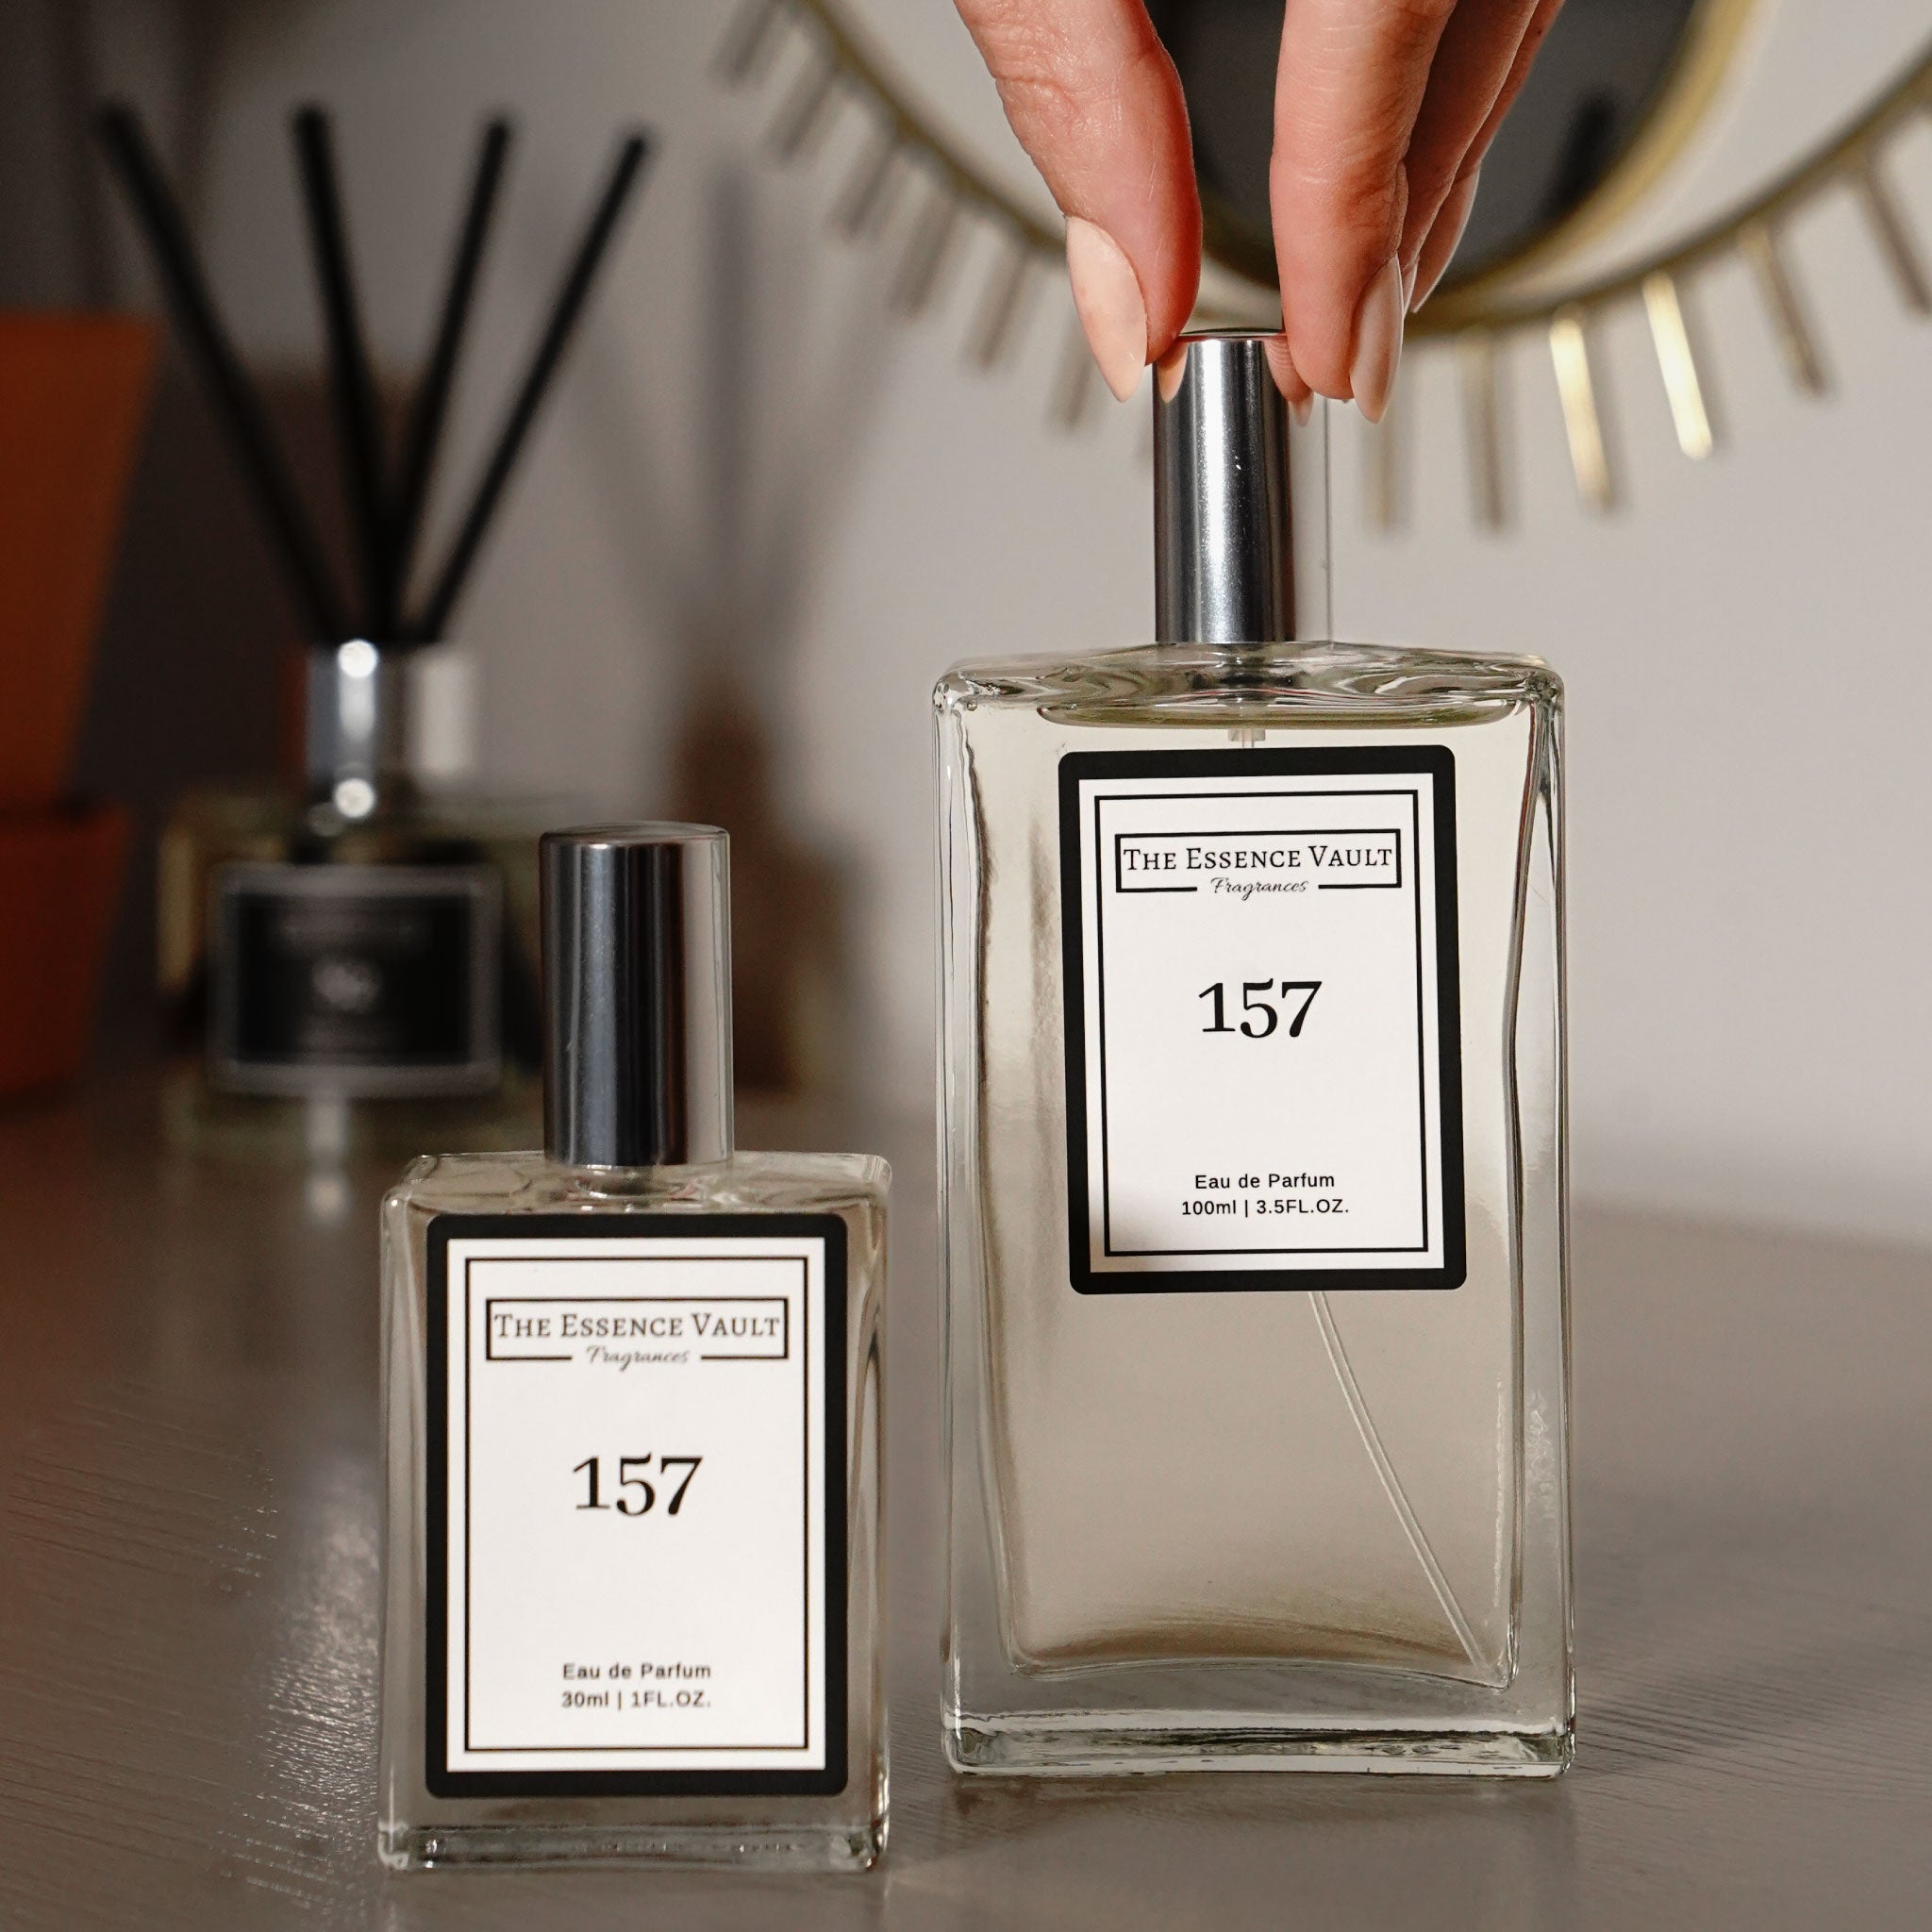 30ml x3 Intense Perfume Set – The Essence Vault US